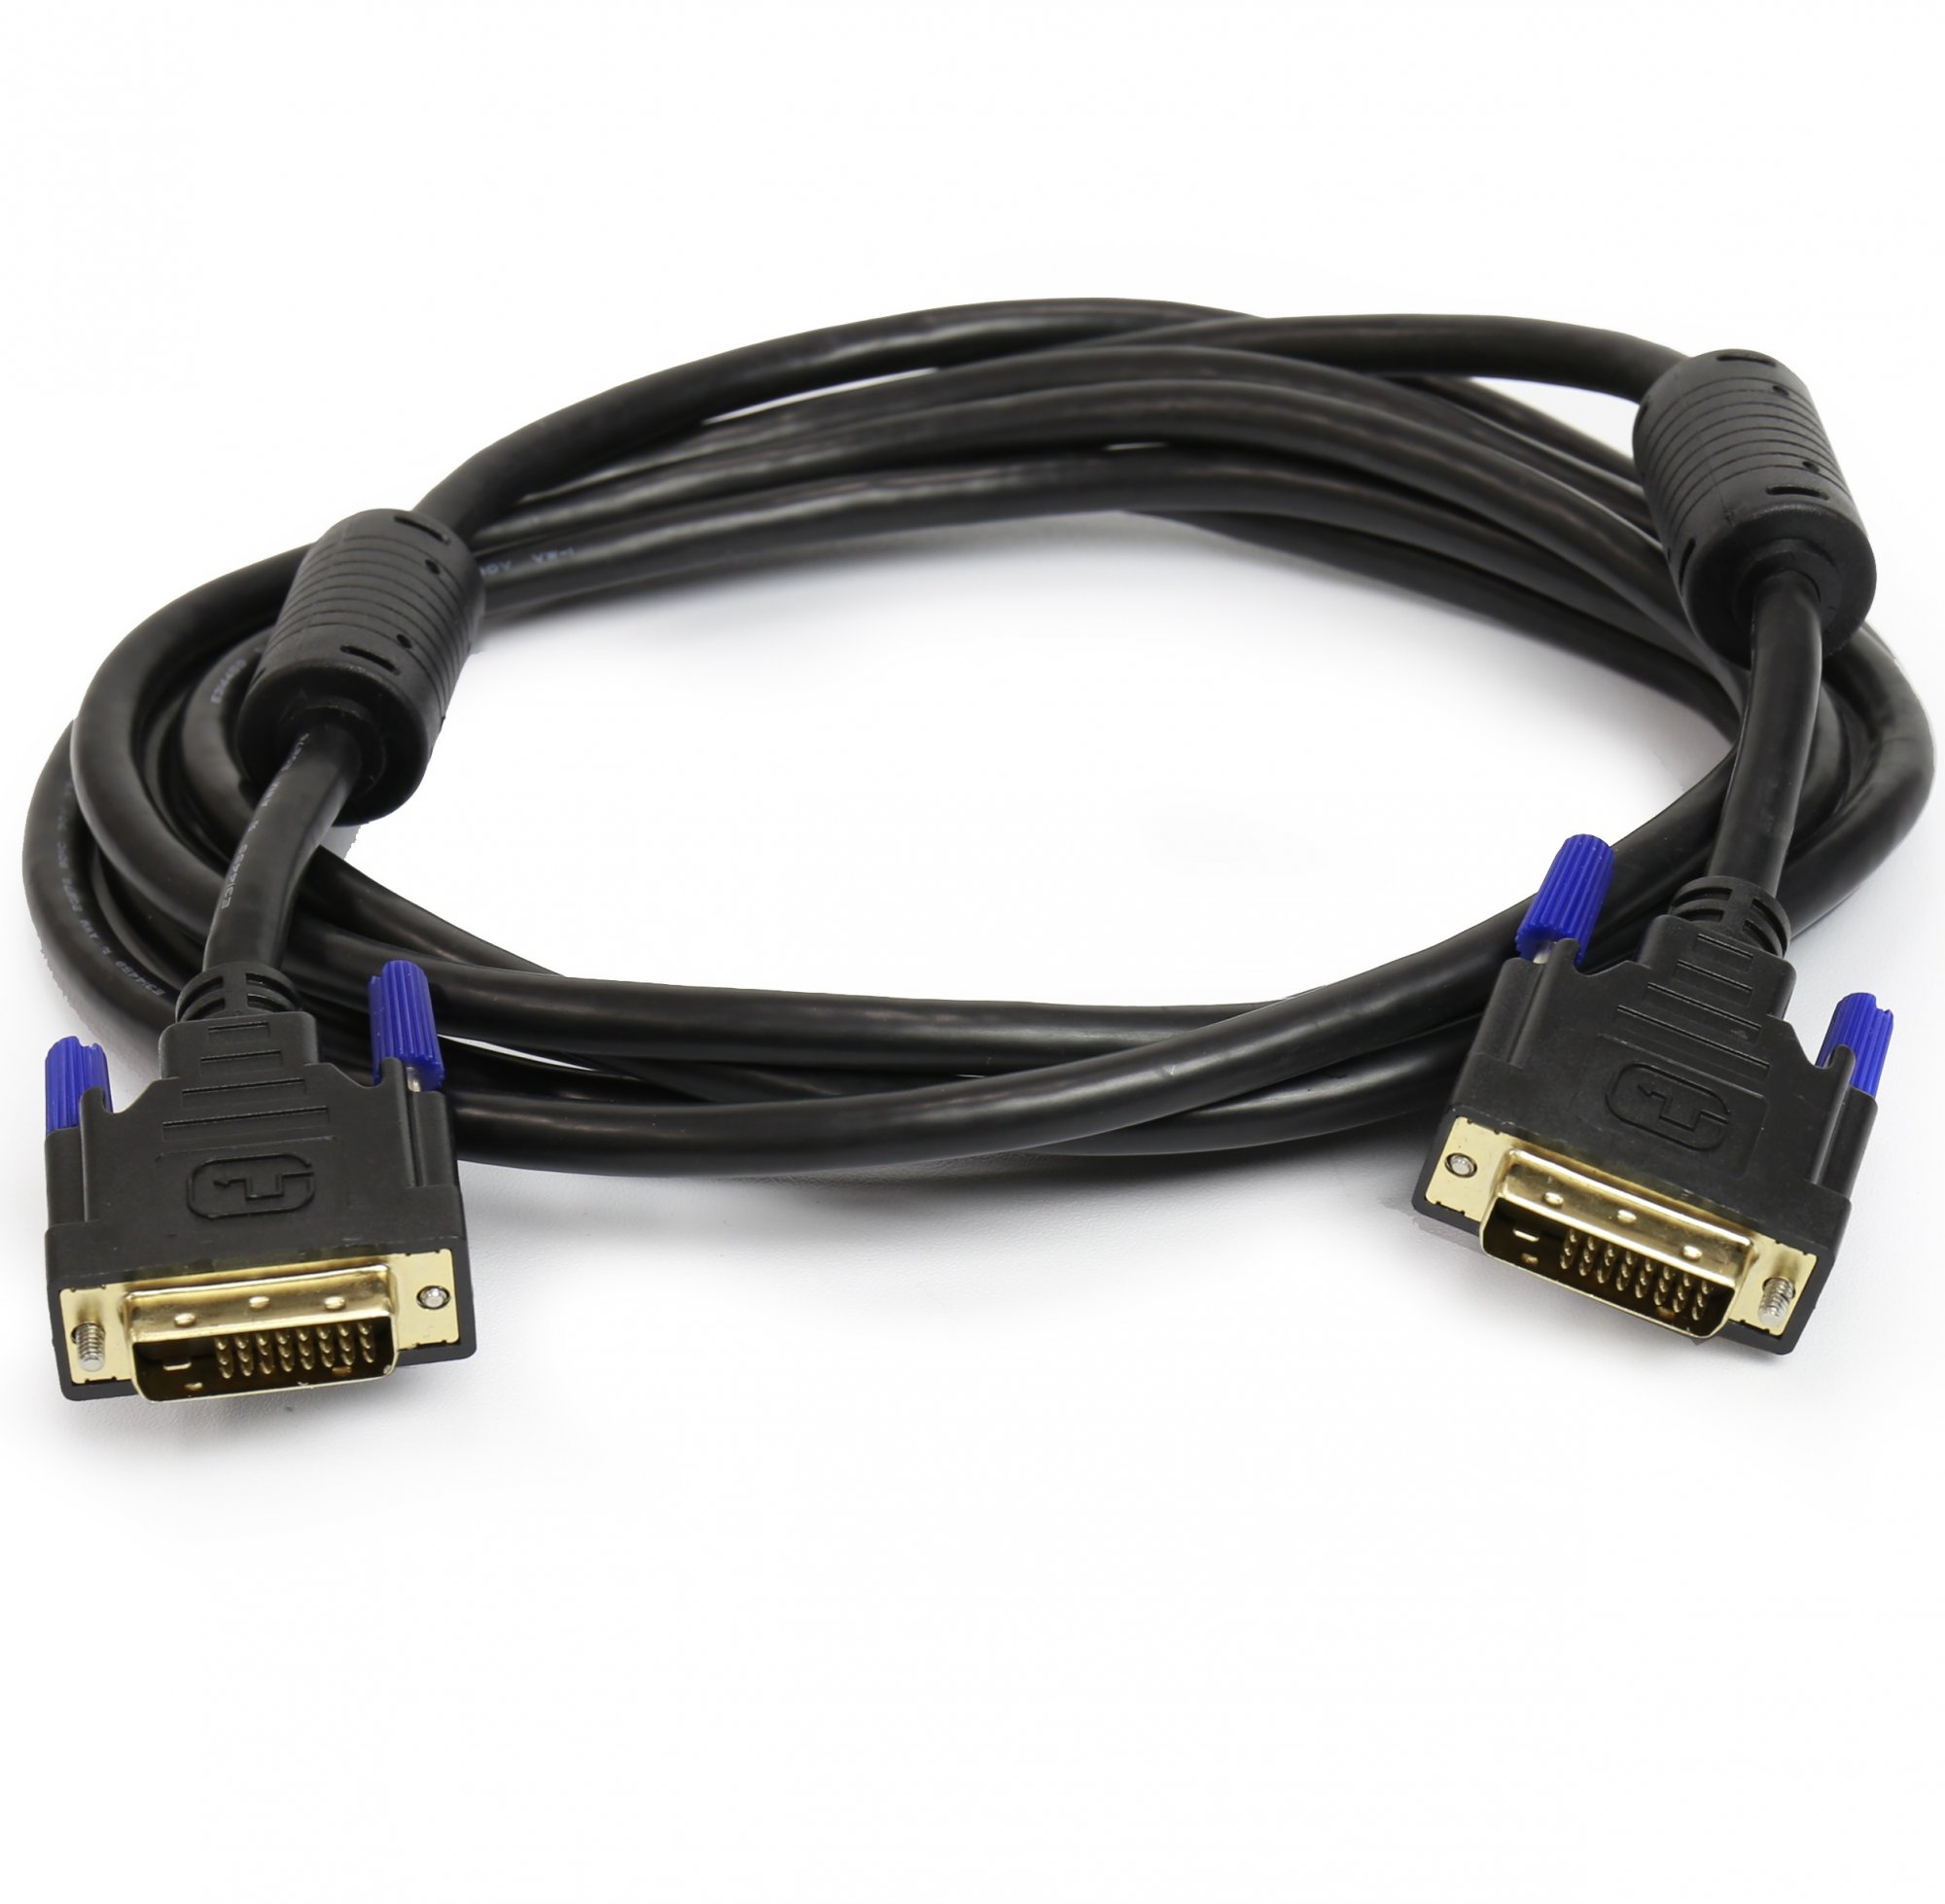 Ergotron 97-750 - 10-ft. DVI Dual-Link Monitor Cable